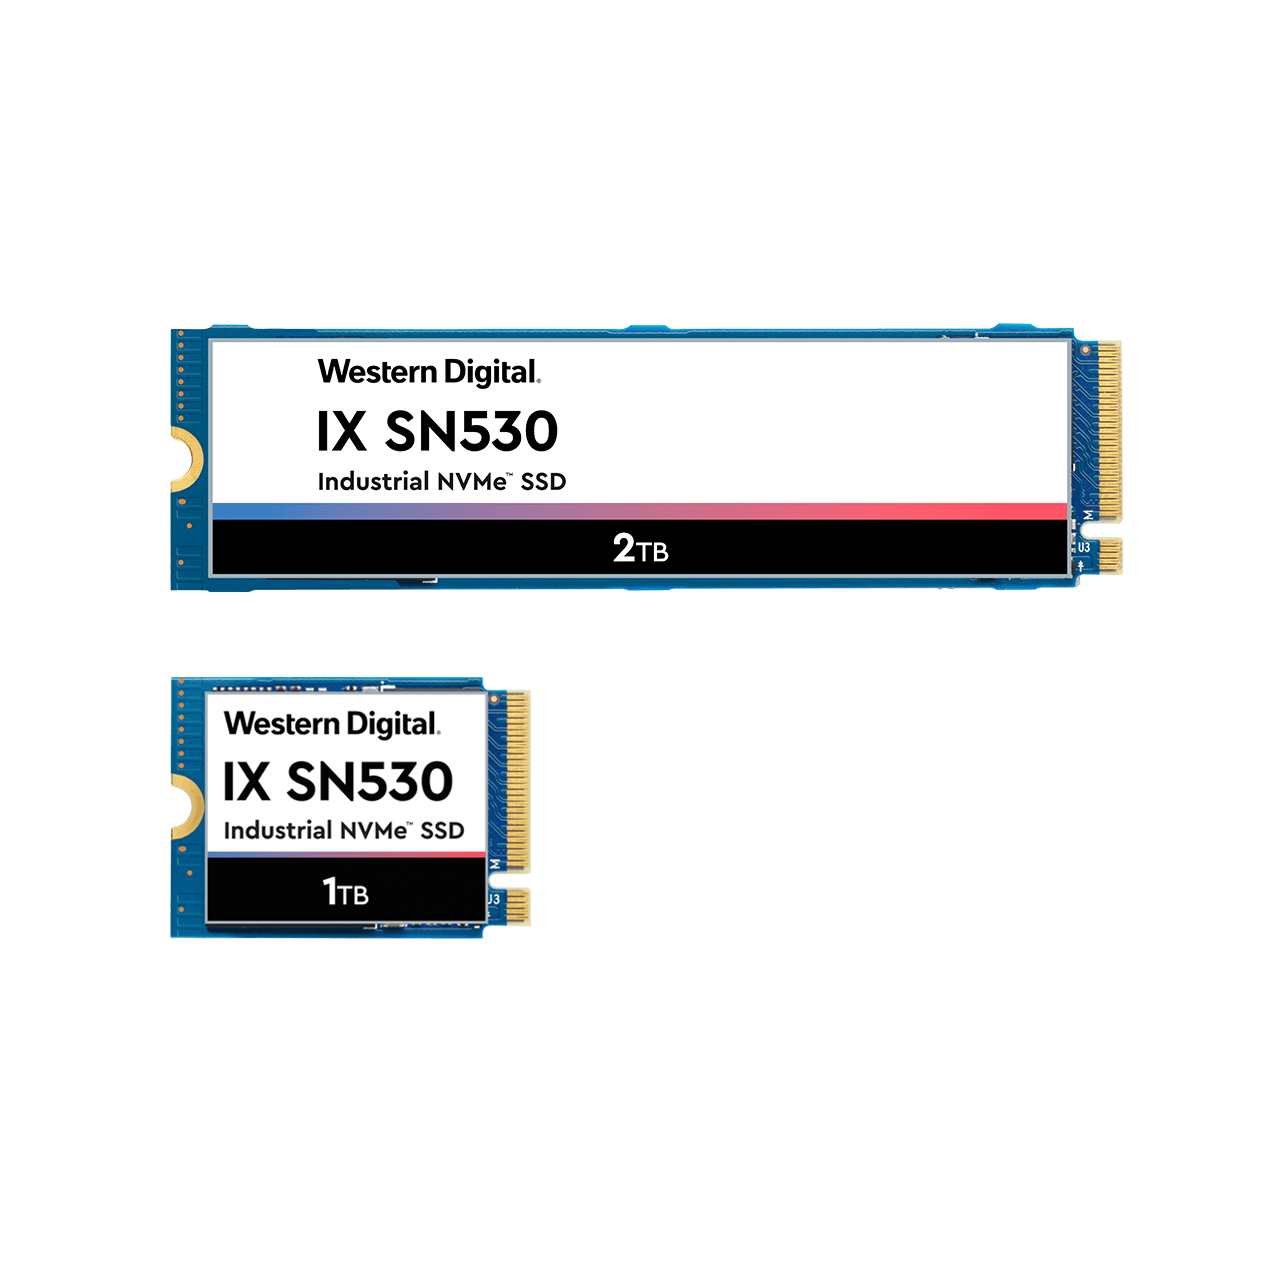 Western Digital IX SN530 Industrial SSD